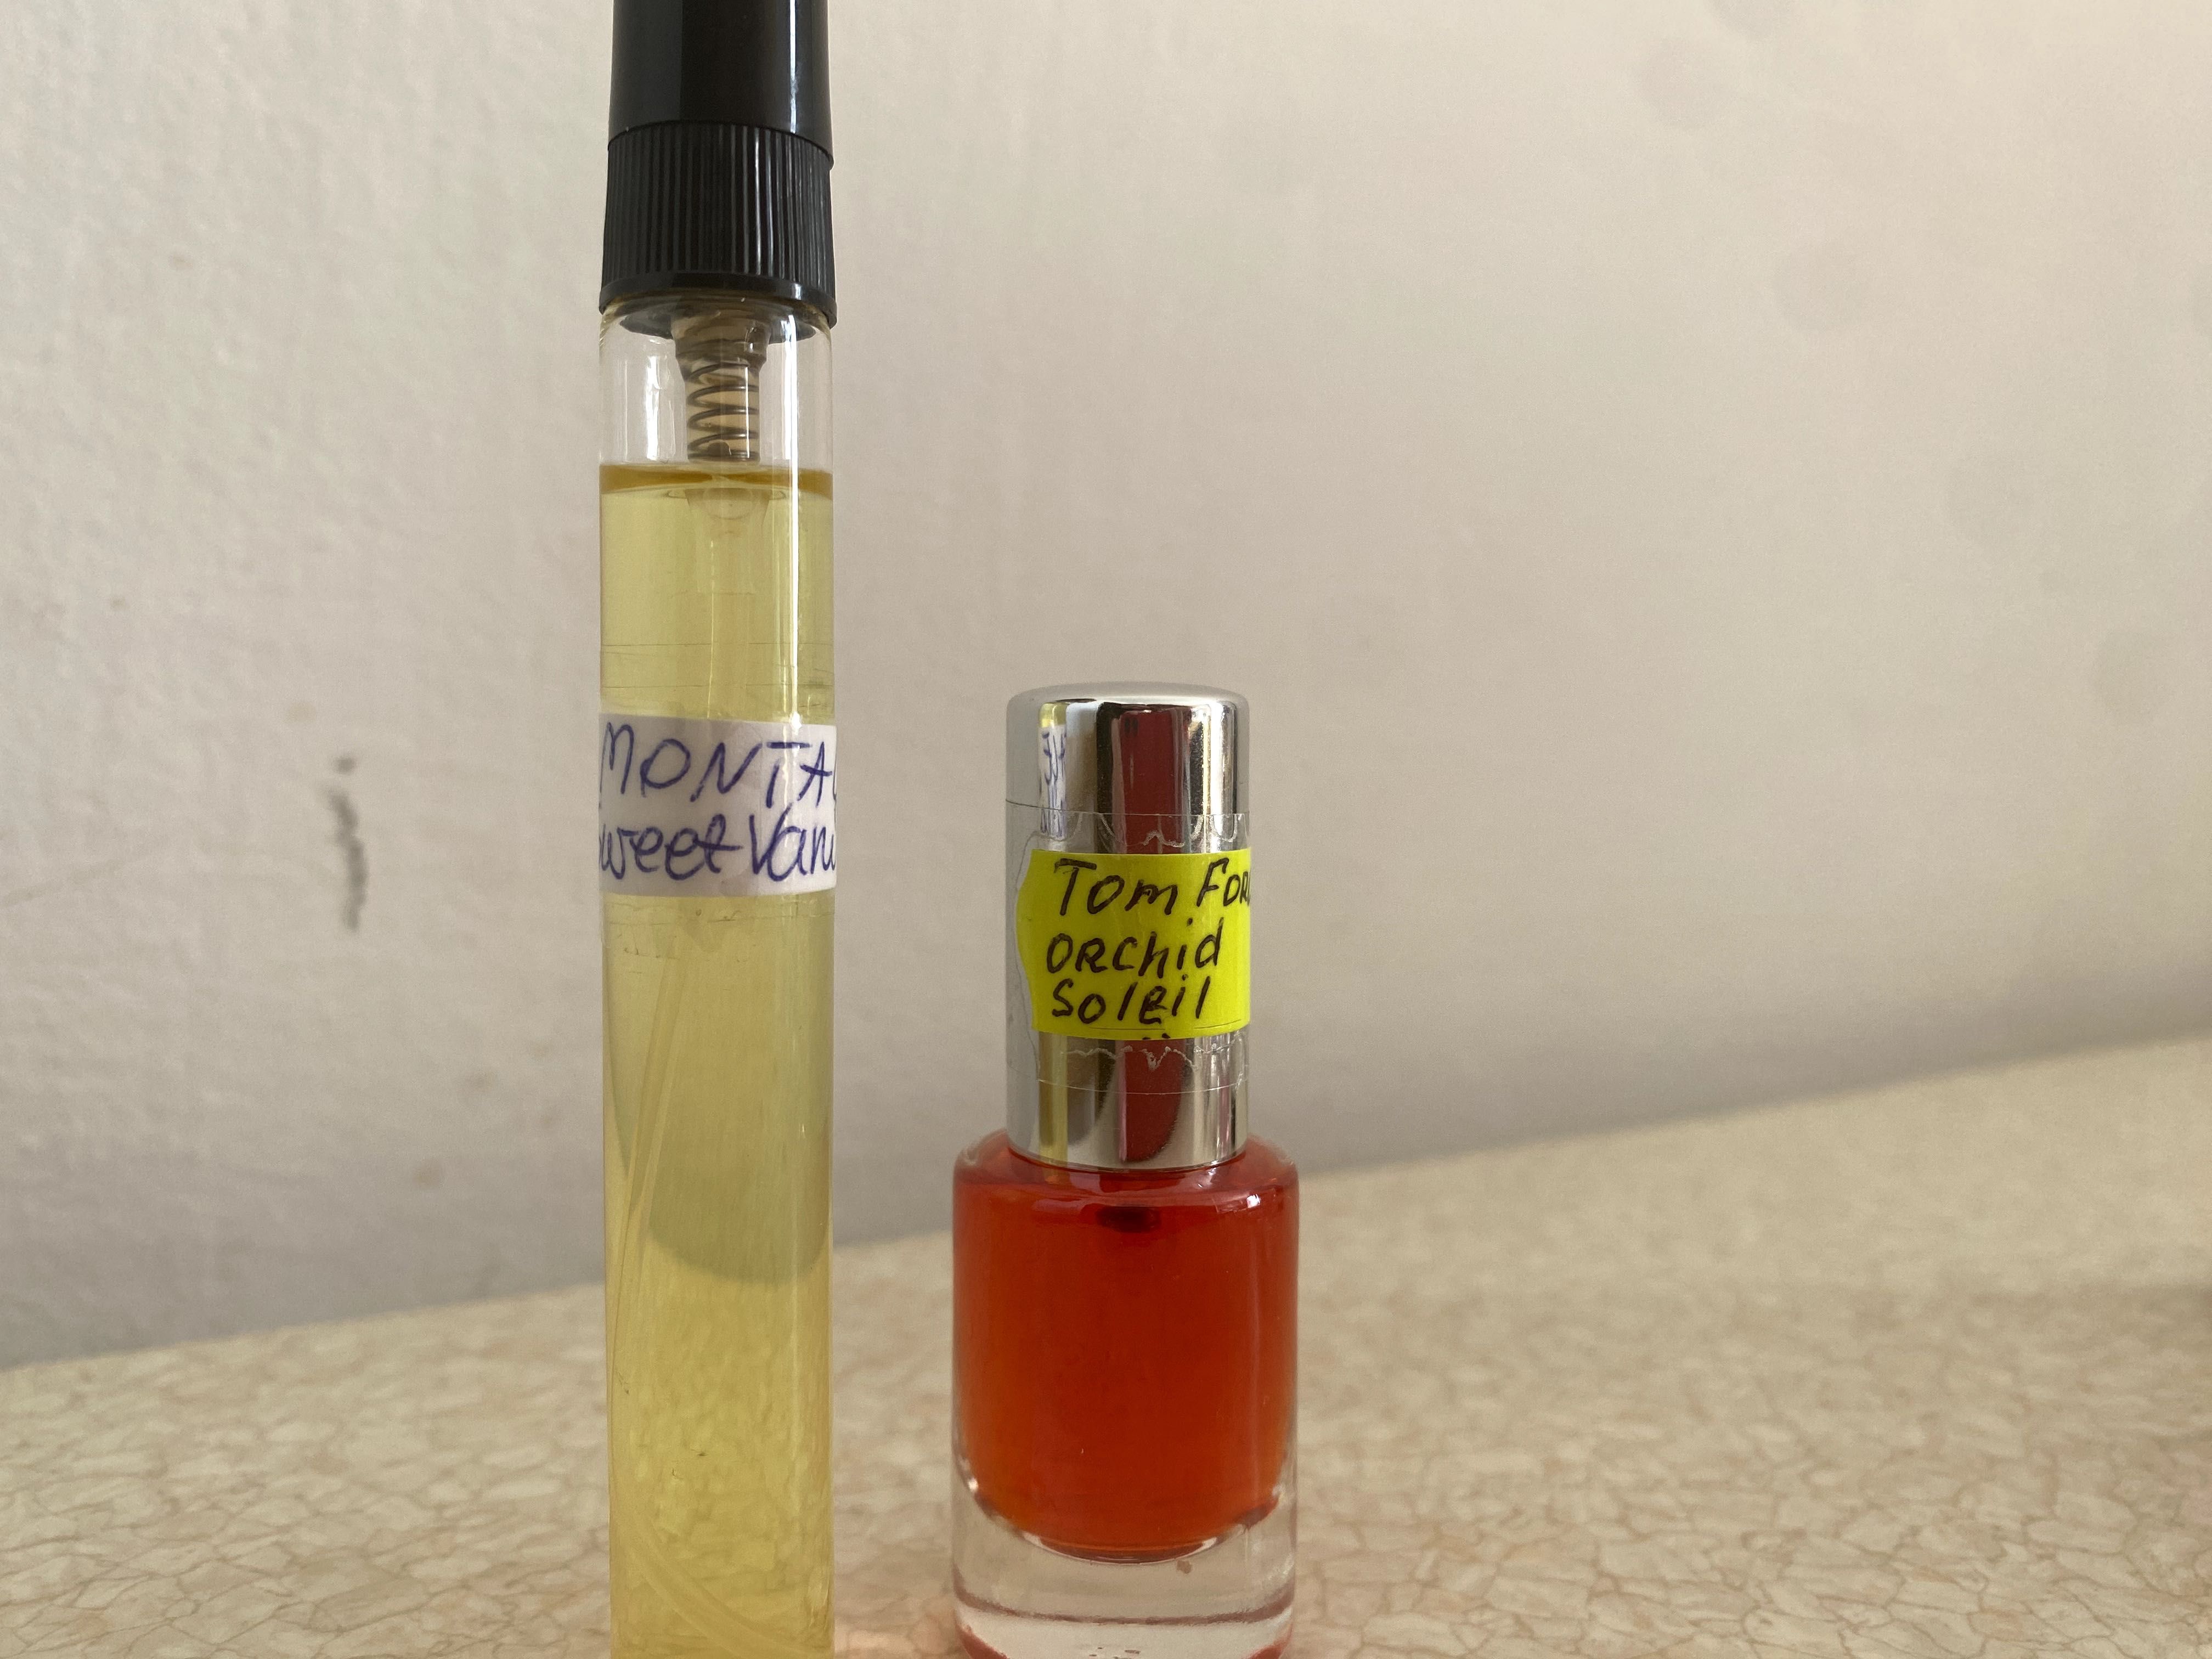 Zestaw perfumy Tom ford orchid soleil oraz Montale sweet vanilla